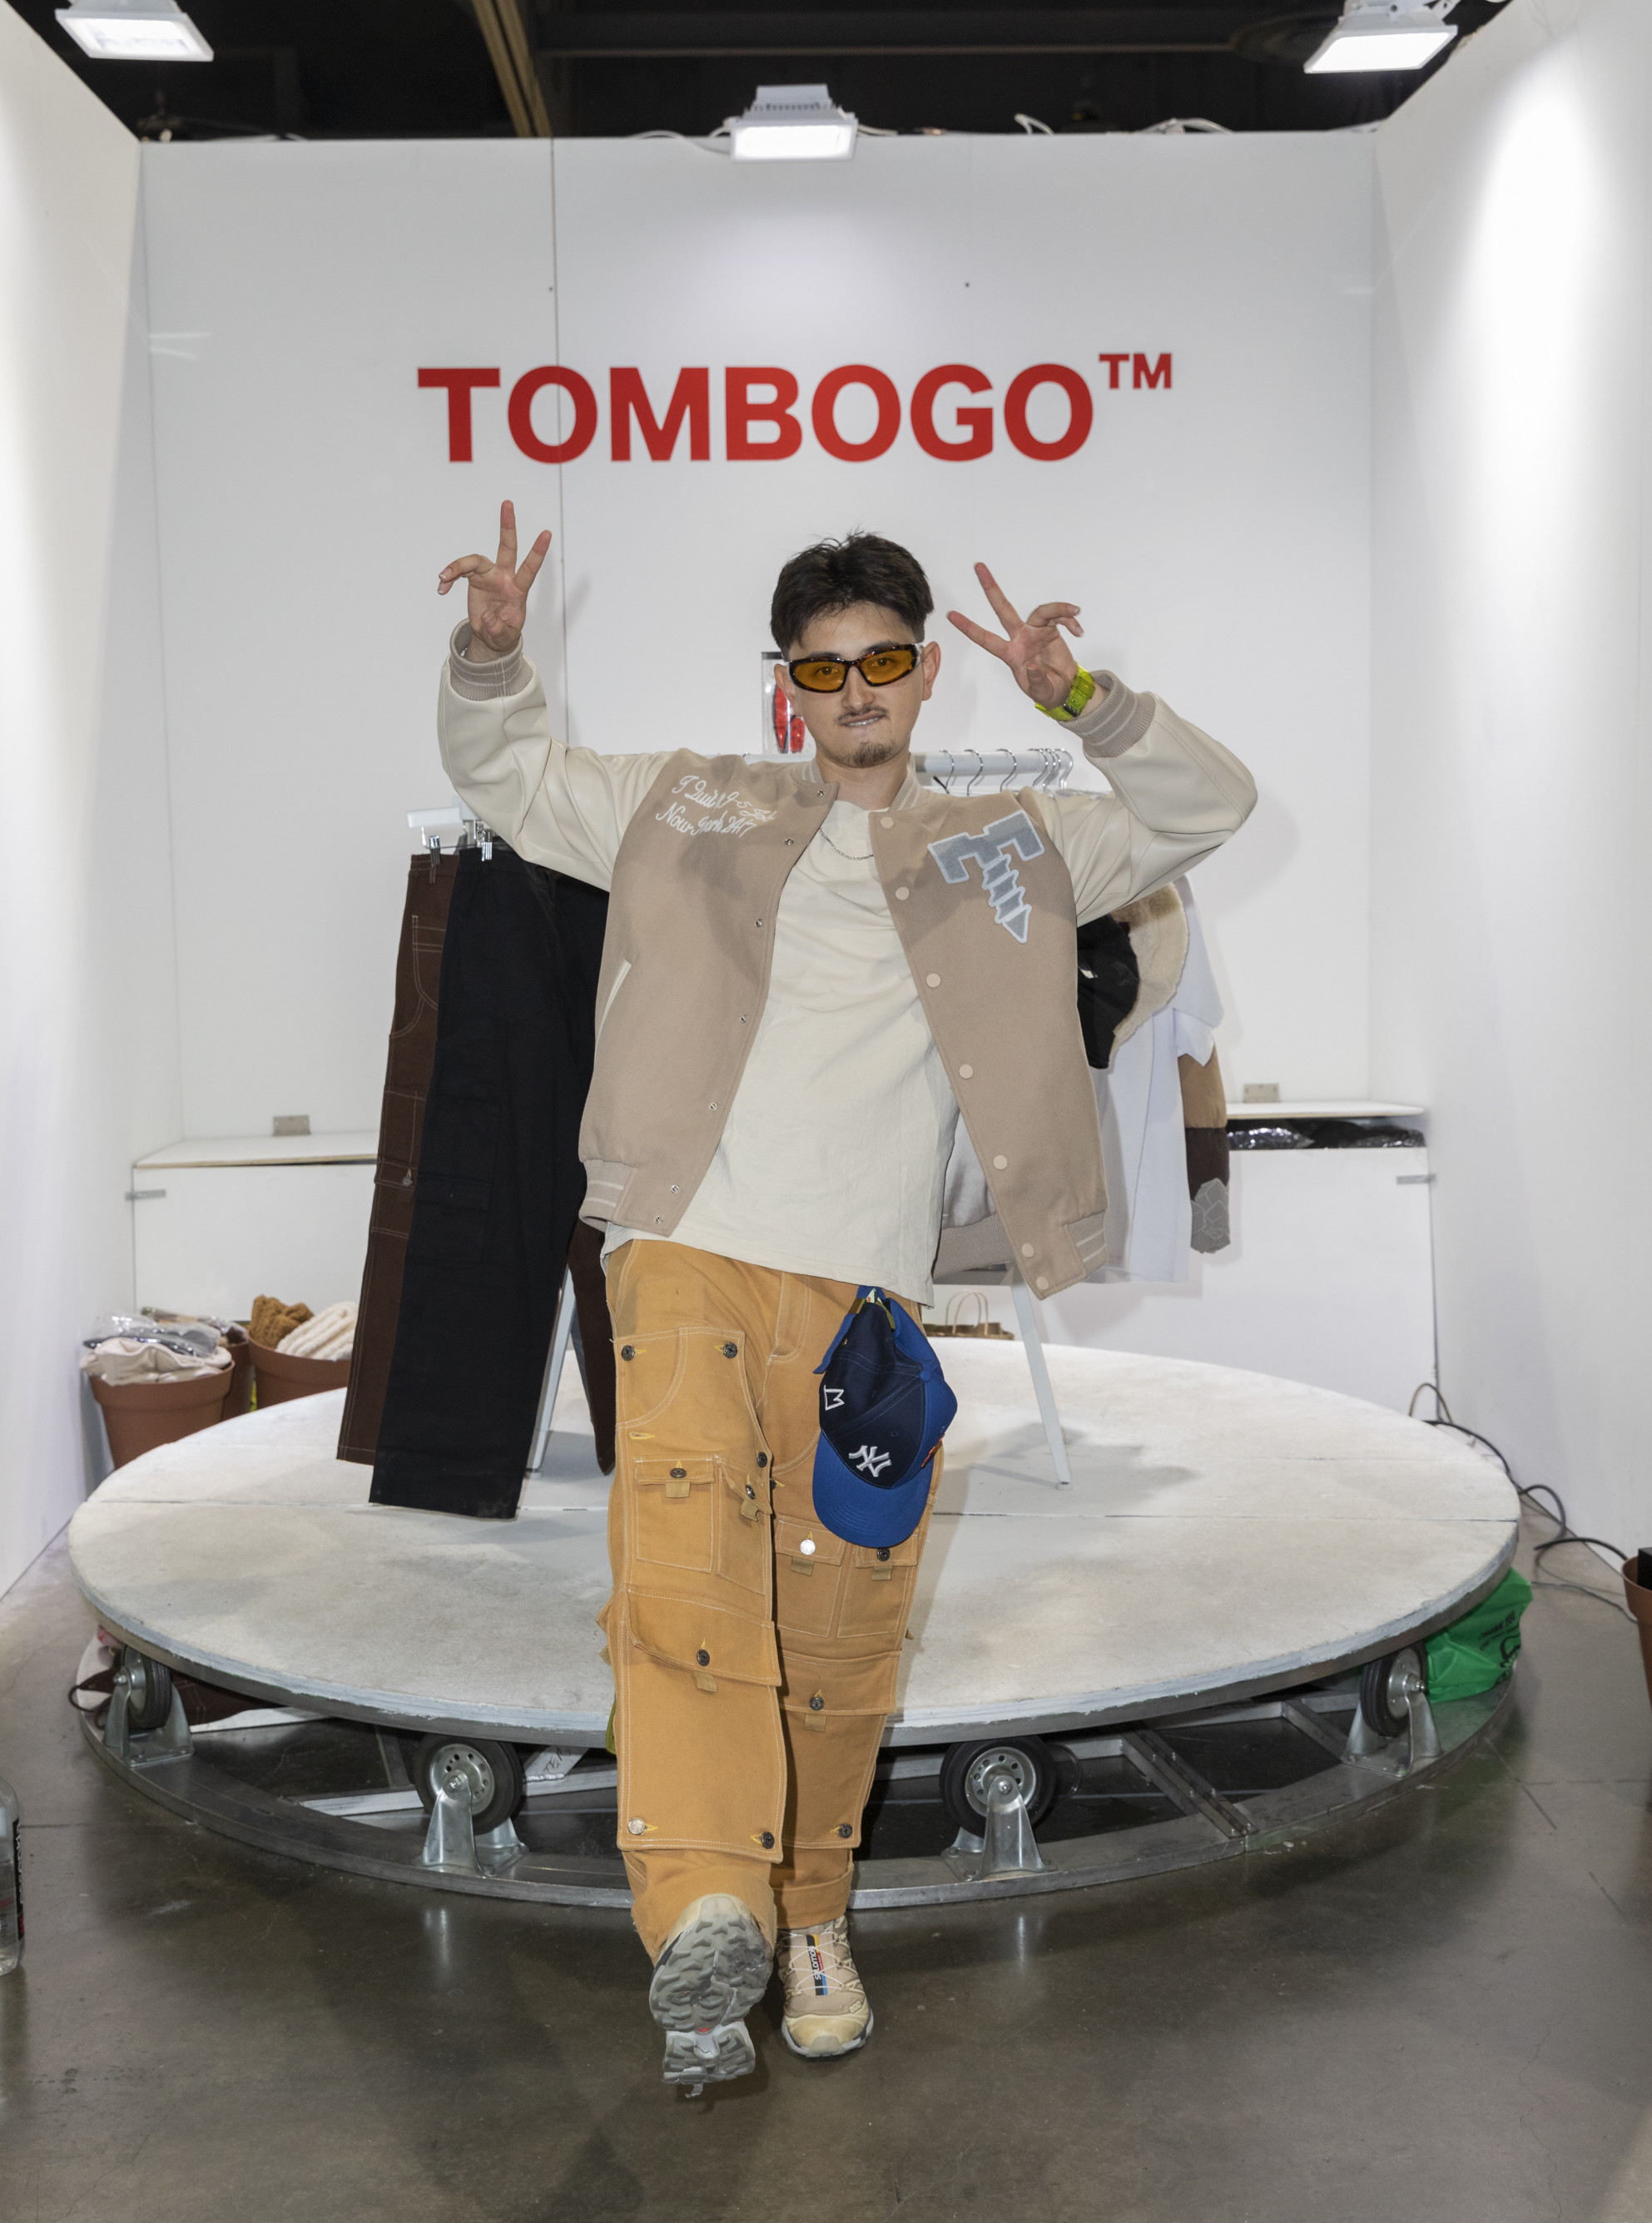 ComplexCon 2022 Brands to Watch Alumni Tombogo